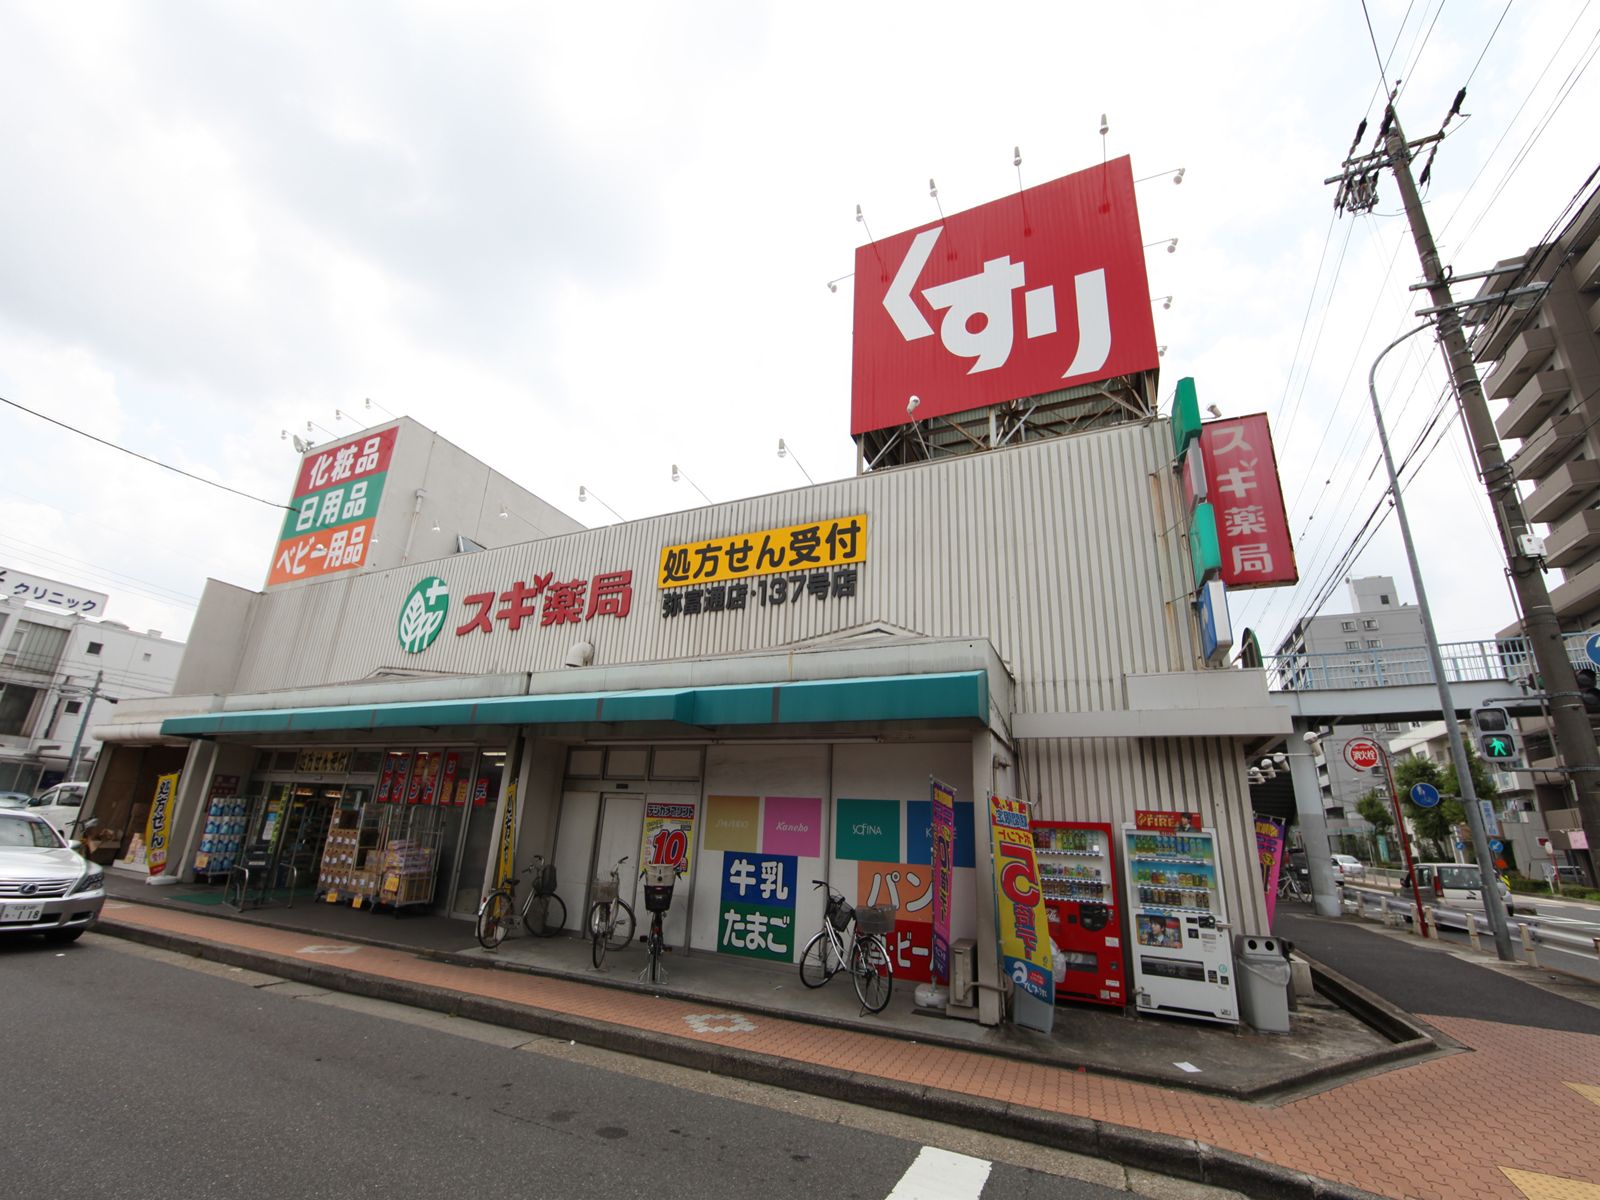 Dorakkusutoa. Cedar pharmacy Yatomitori shop 472m until (drugstore)